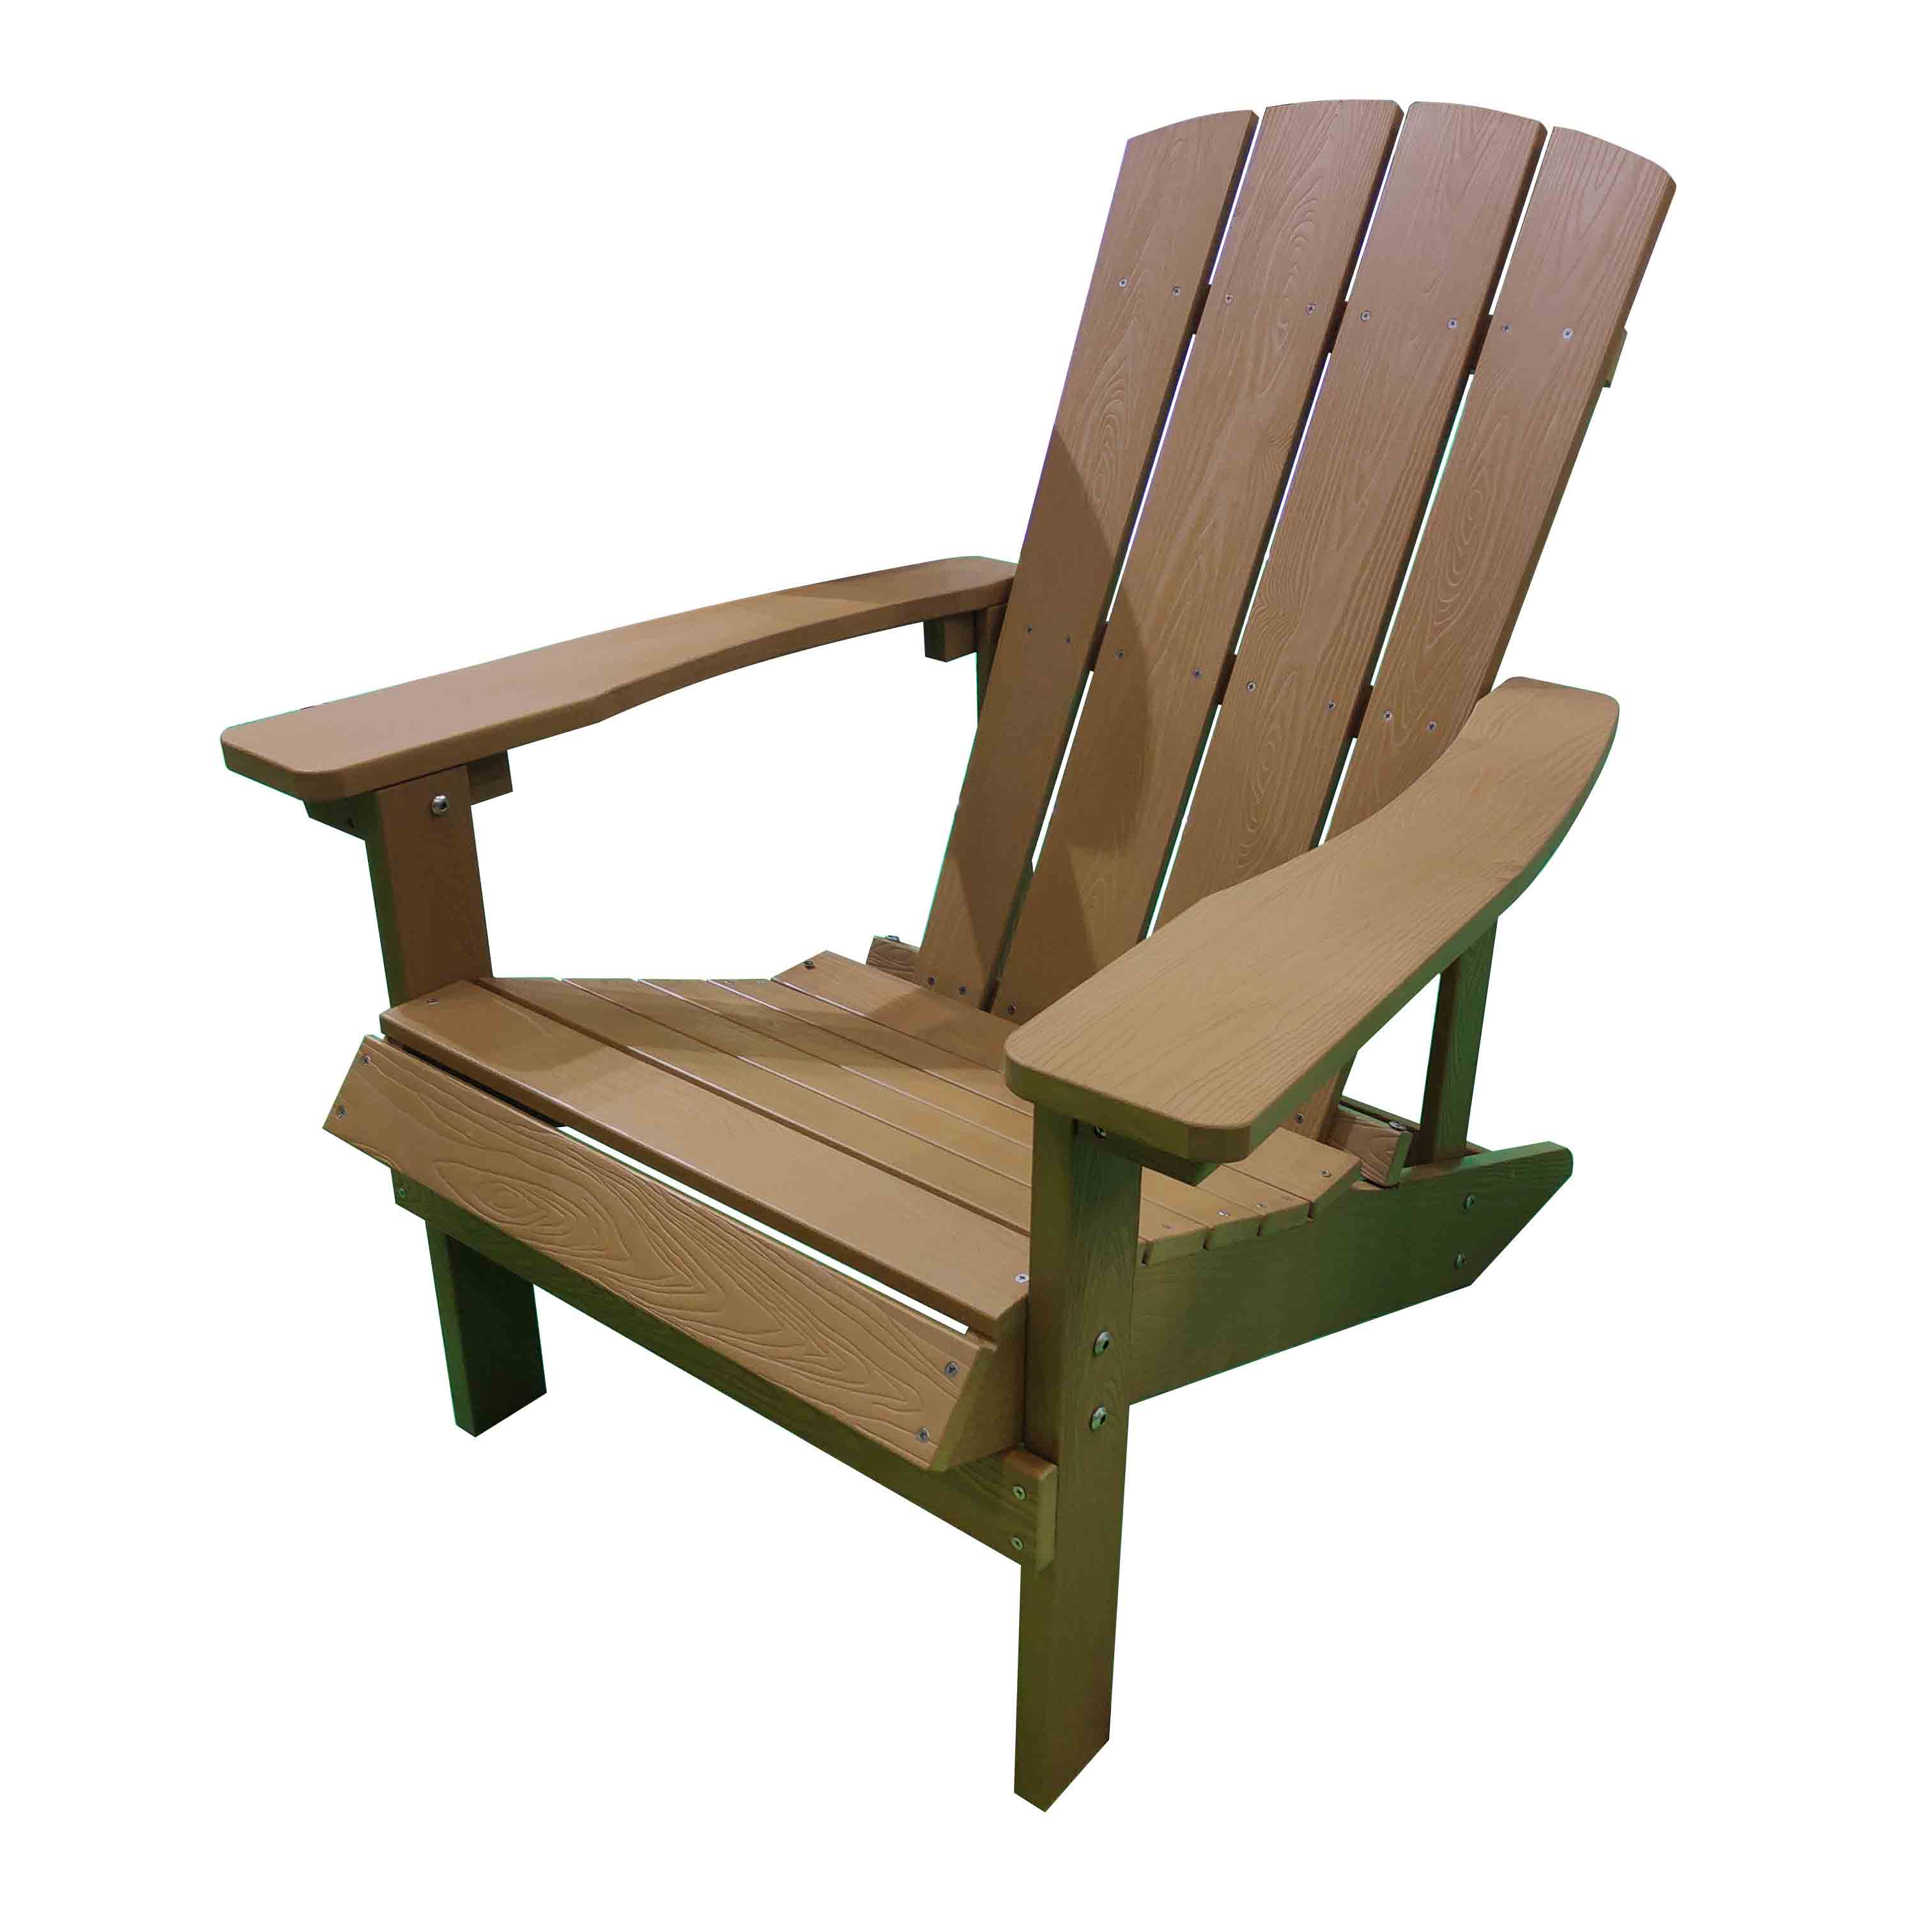 JJ-C14501-TEAK-GG PS wood Adirondack chair Featured Image